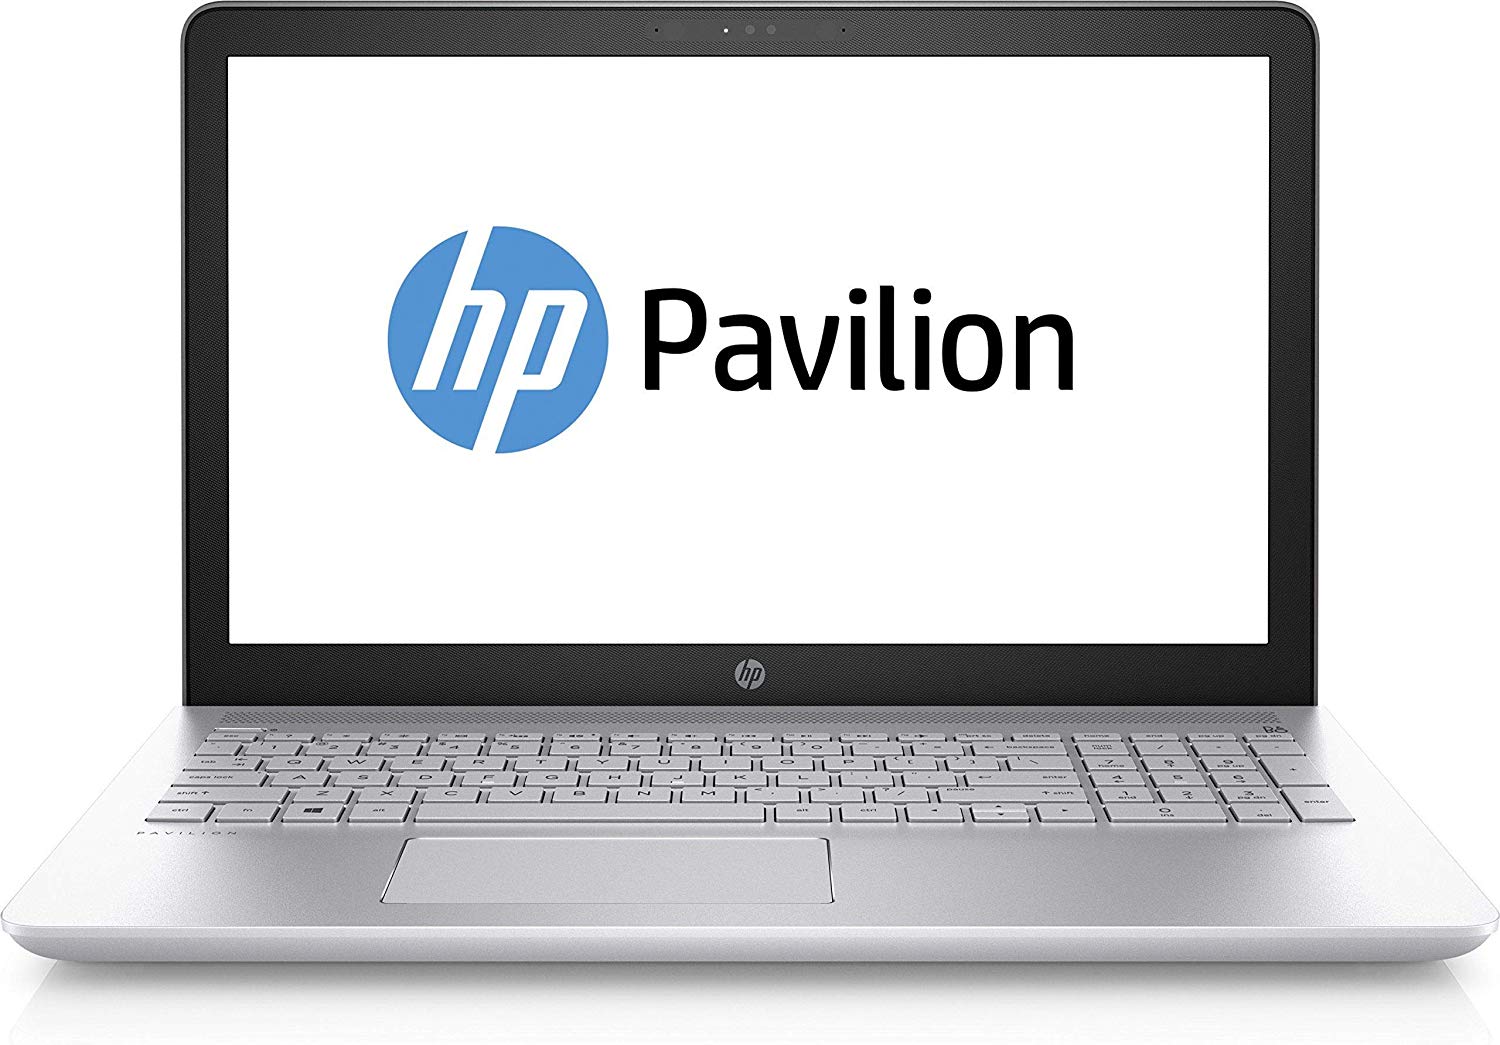 HP Pavilion Intel Core i5 15.6-inch FHD Thin and Light Laptop (8GB/1TB HDD/Windows 10 Home/2GB Graphics/Silver/2.02 kg), cc129TX